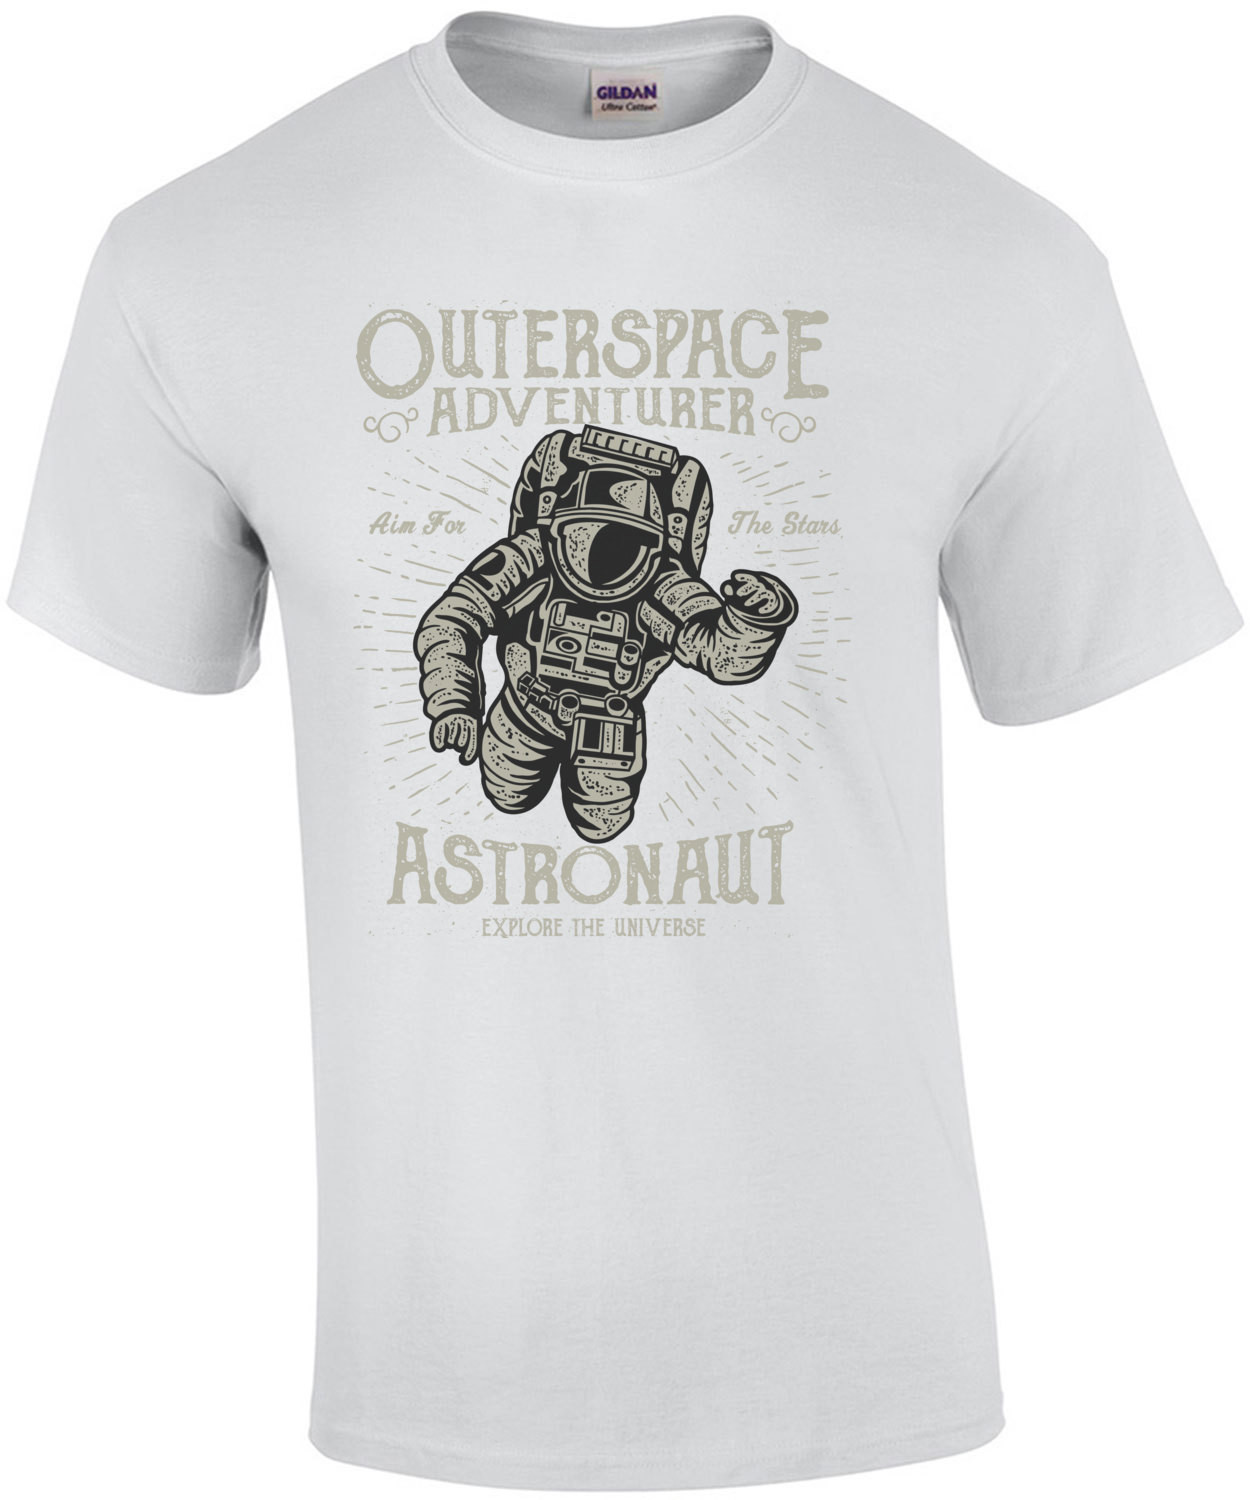 Outer Space Adventurer Astronaut Retro Recruitment Poster T-Shirt